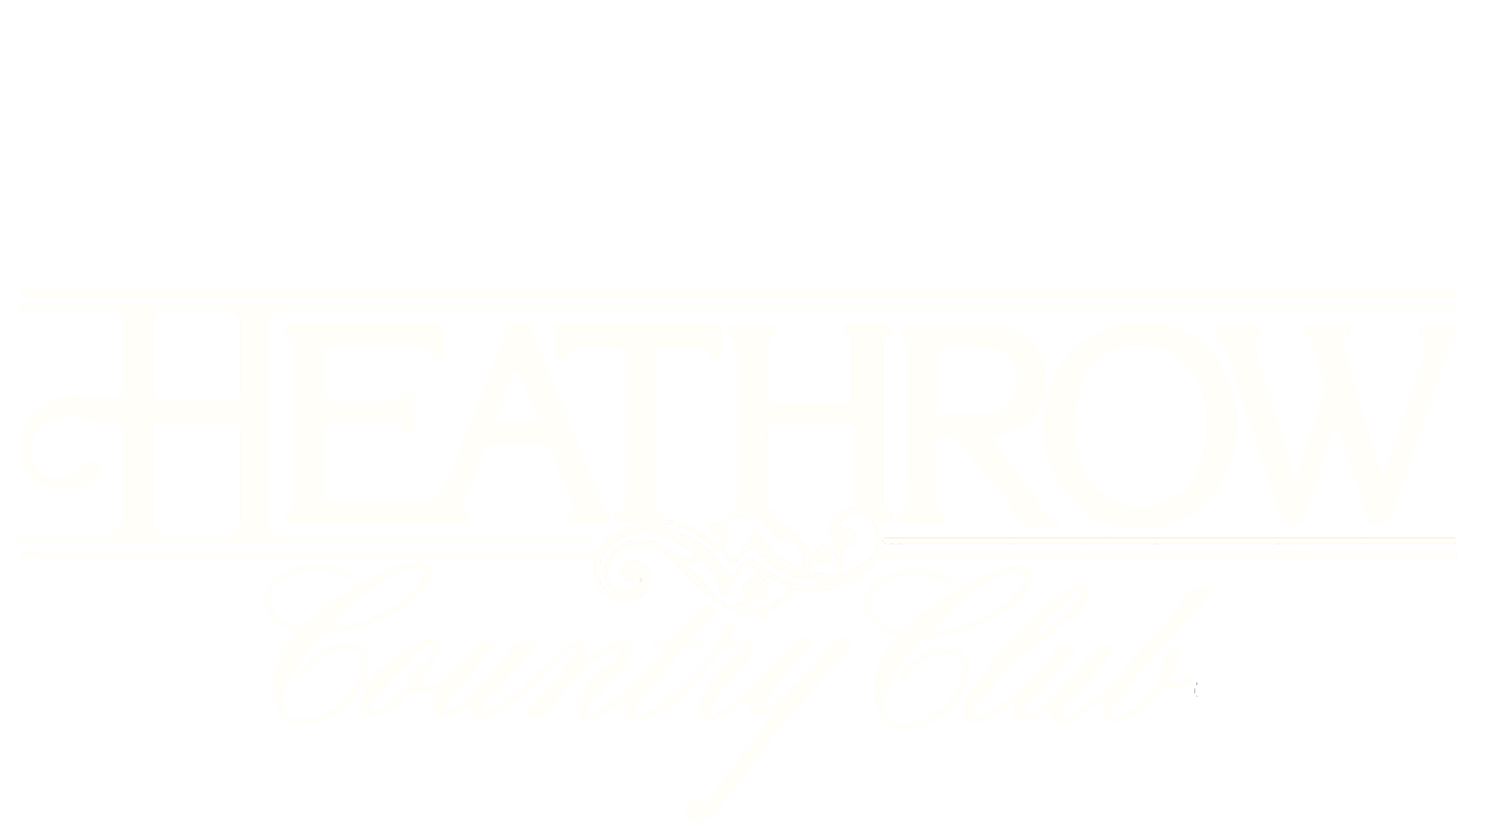 Heathrow Country Club Events